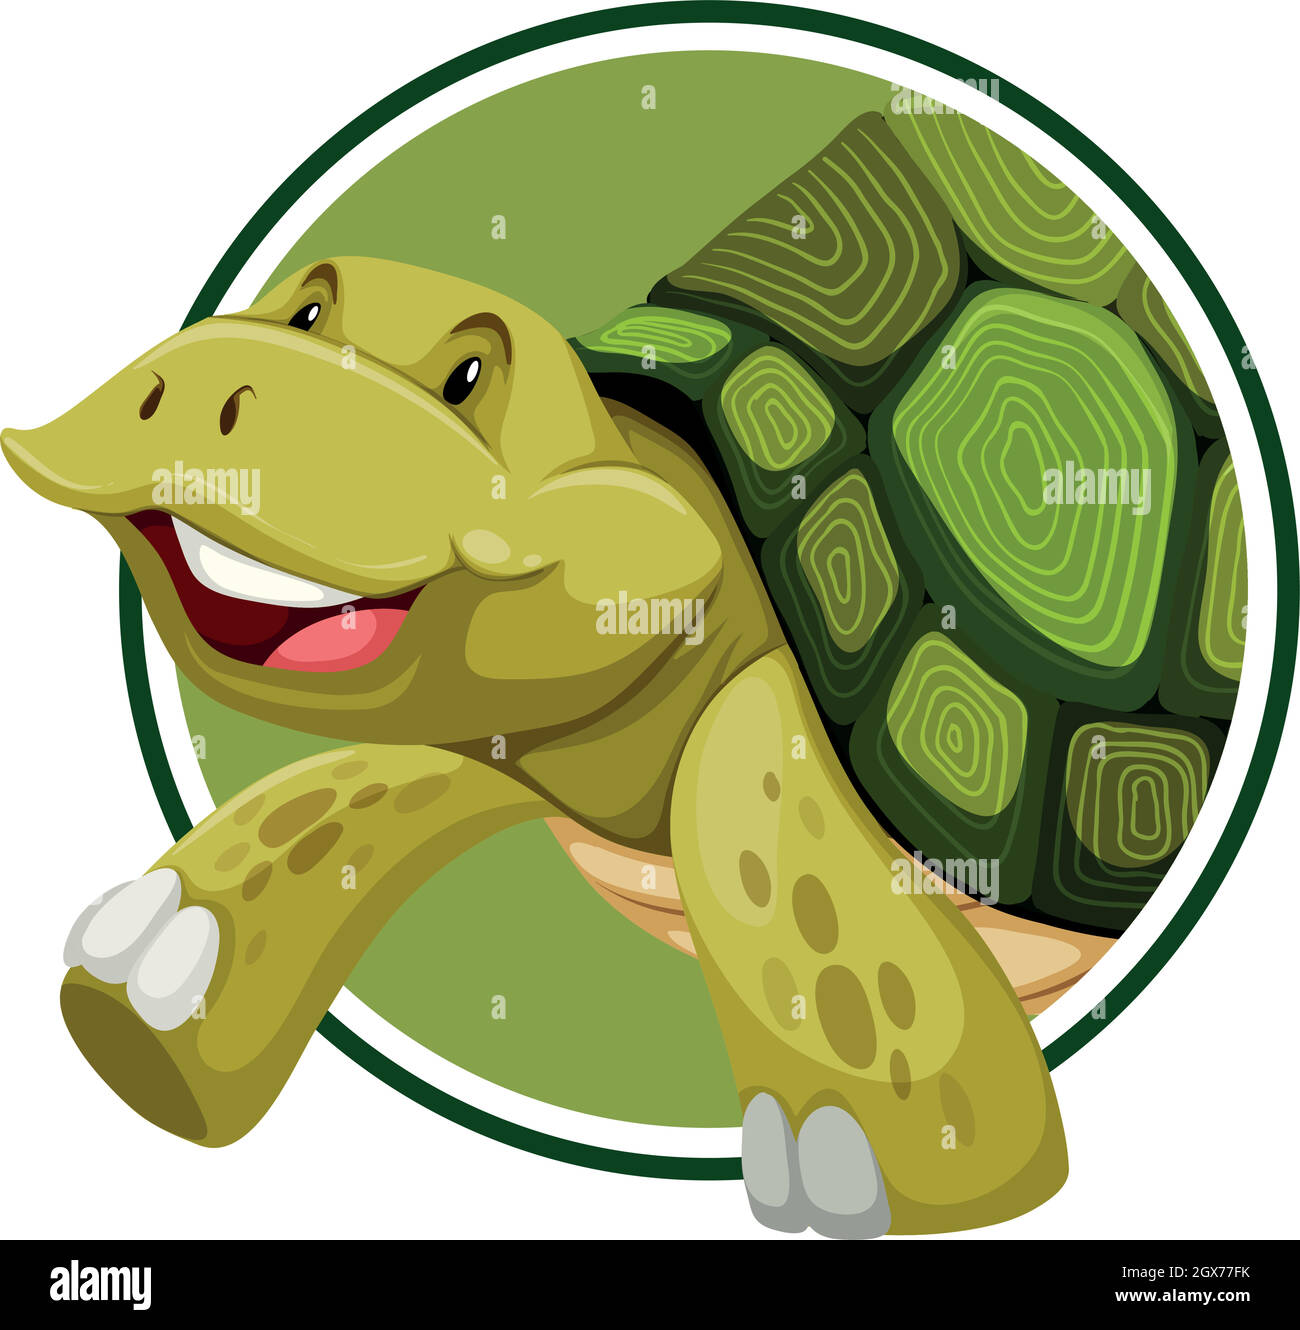 https://c8.alamy.com/comp/2GX77FK/turtle-on-sticker-template-2GX77FK.jpg